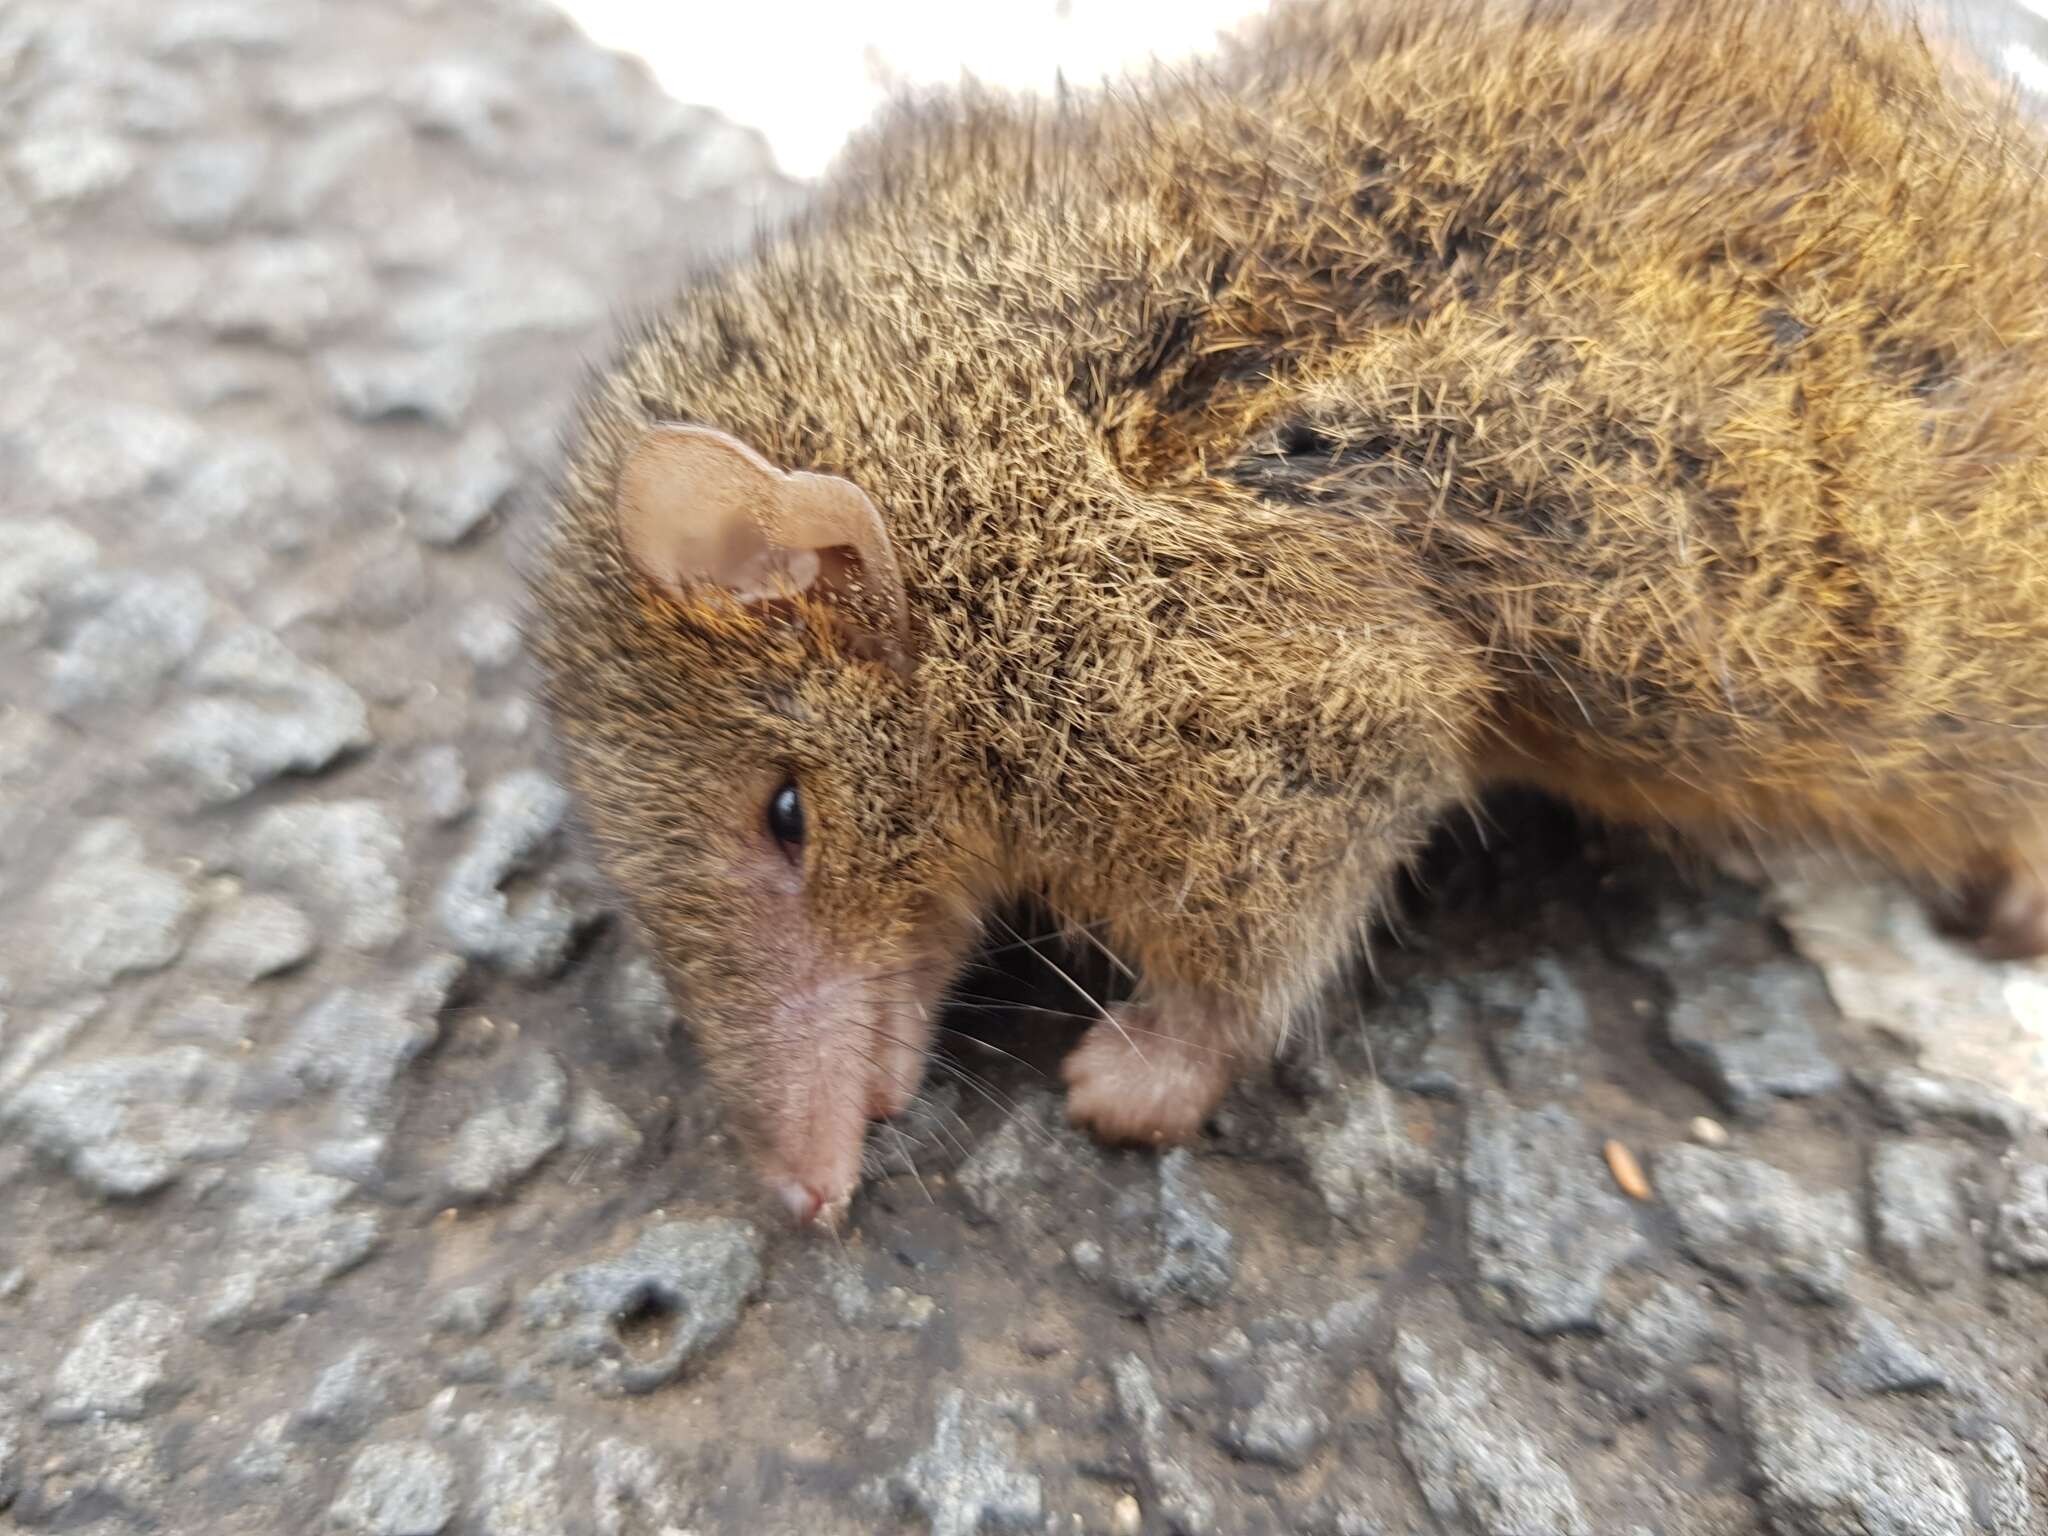 Image of Little Tasmanian Marsupial-mouse